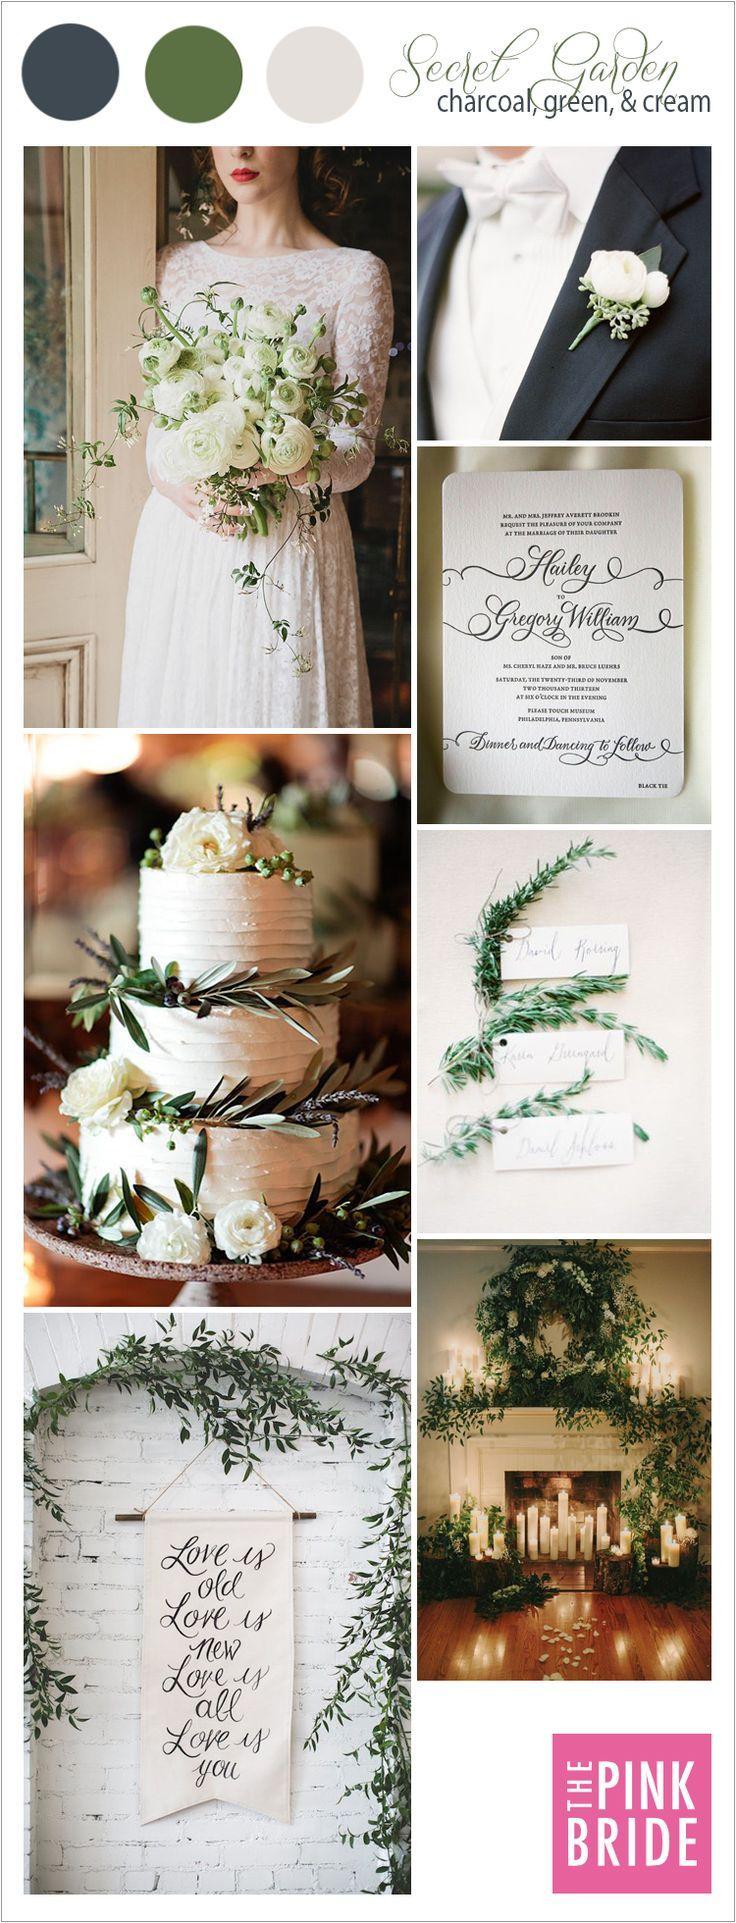 Wedding - Wedding Color Board: Secret Garden Green & Cream